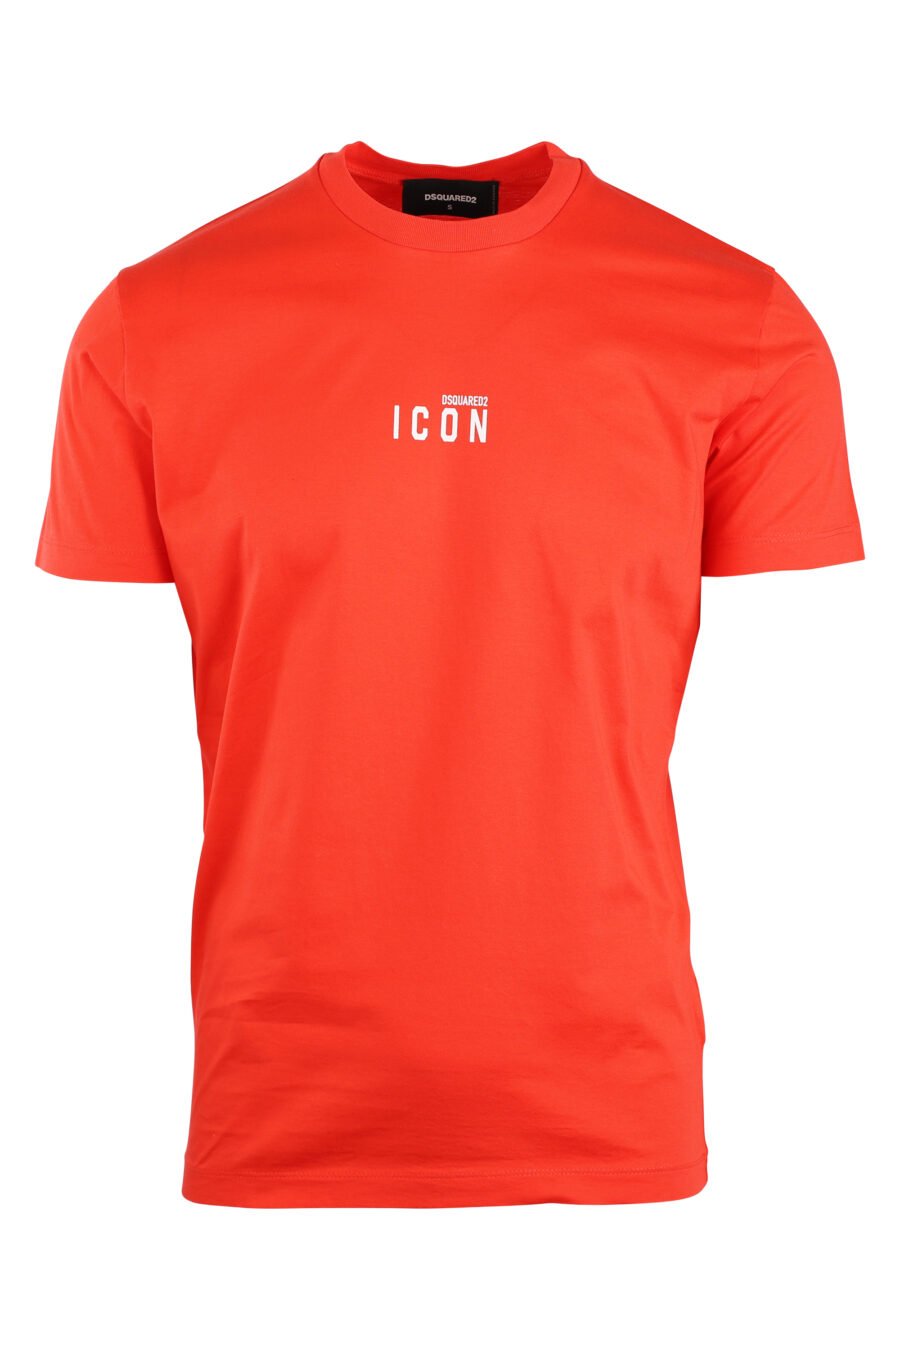 Orangefarbenes T-Shirt mit Minilogo "Icon" - IMG 8926